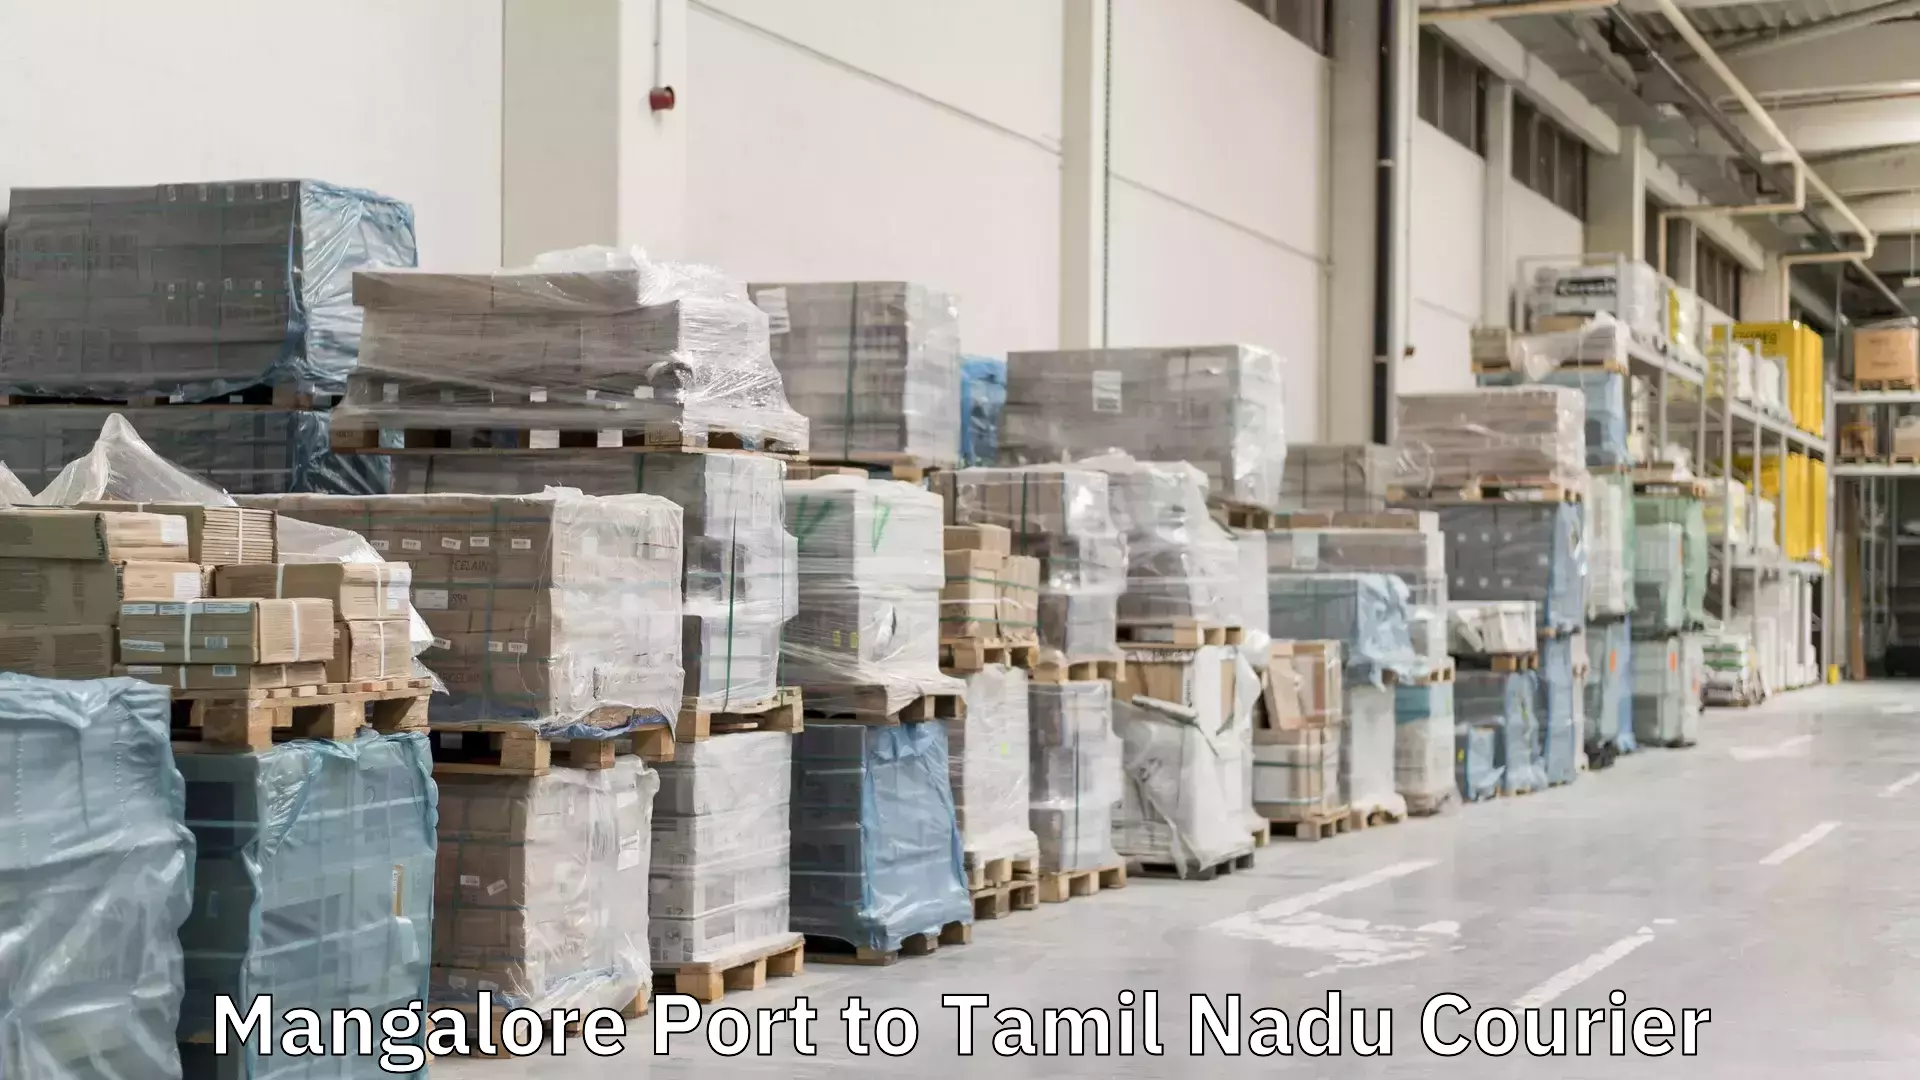 International parcel service Mangalore Port to Tamil Nadu